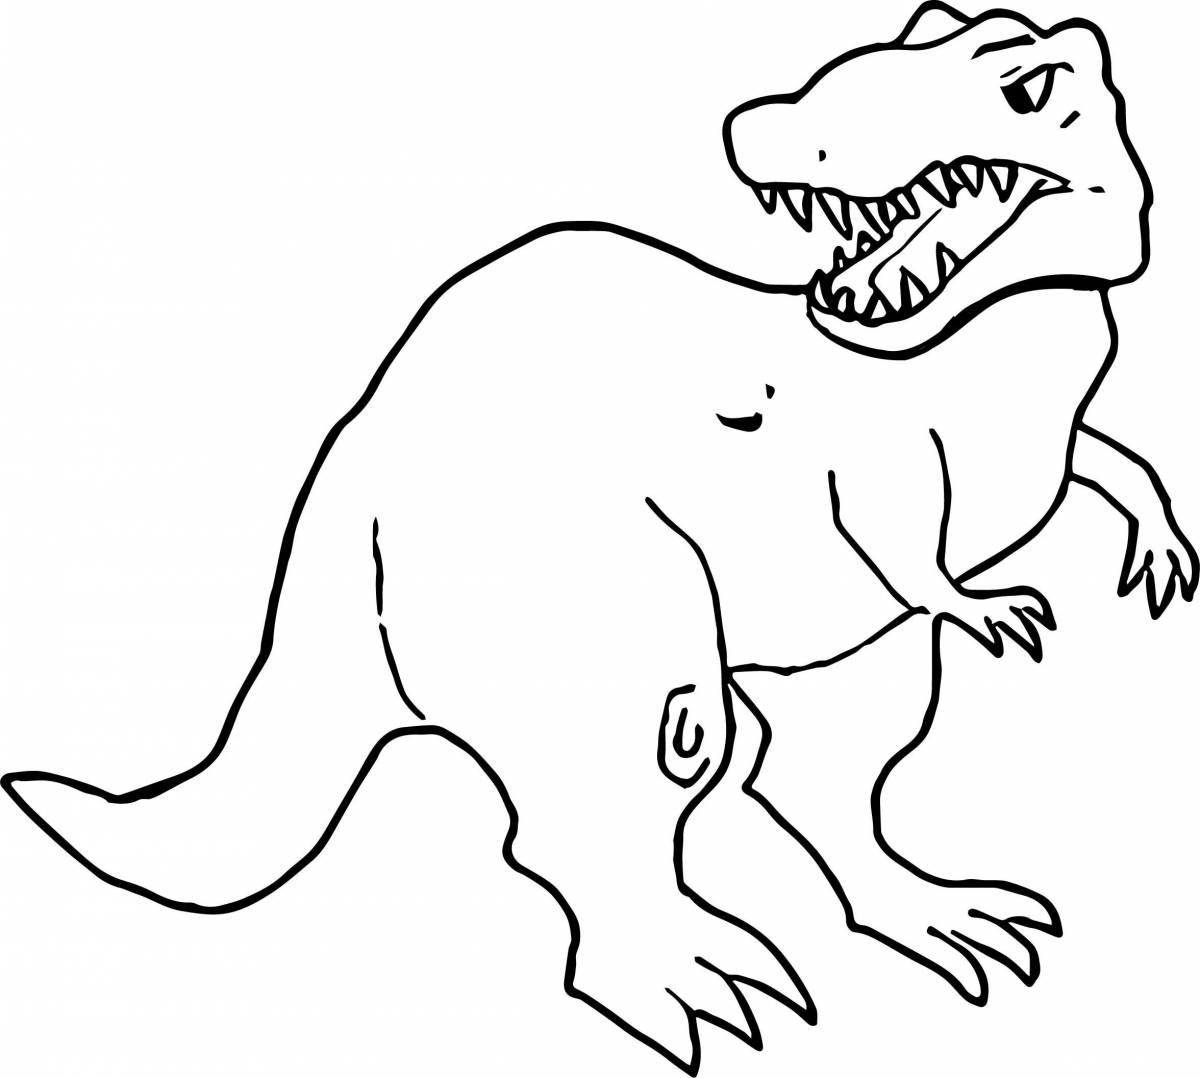 Adorable rex dinosaur coloring book for kids